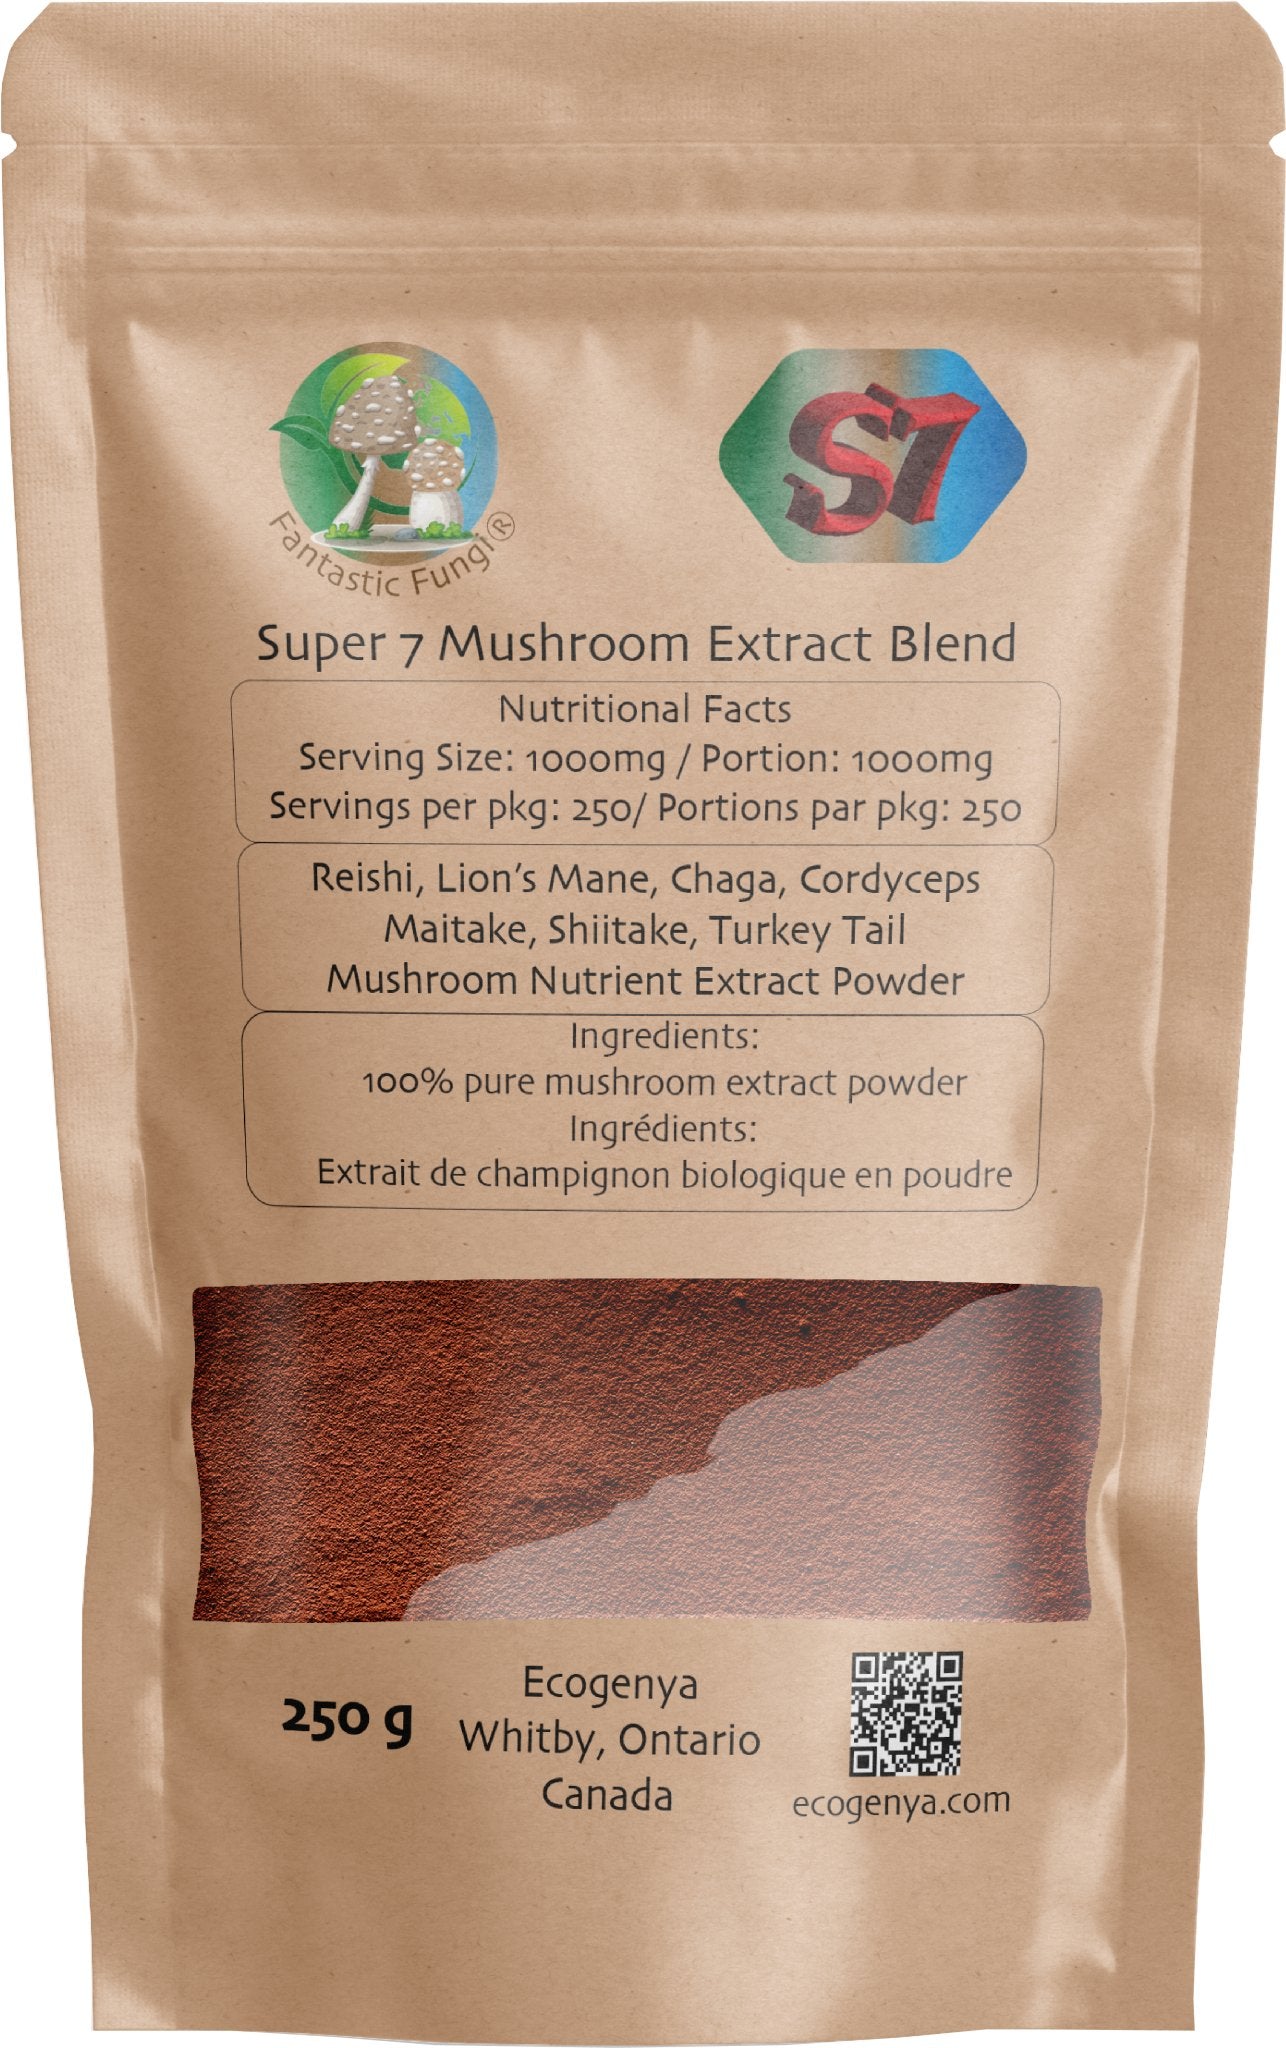 Organic Super Seven Mushroom blend extract powder – Halal, Kosher, Vegan, Non-GMO - Ecogenya